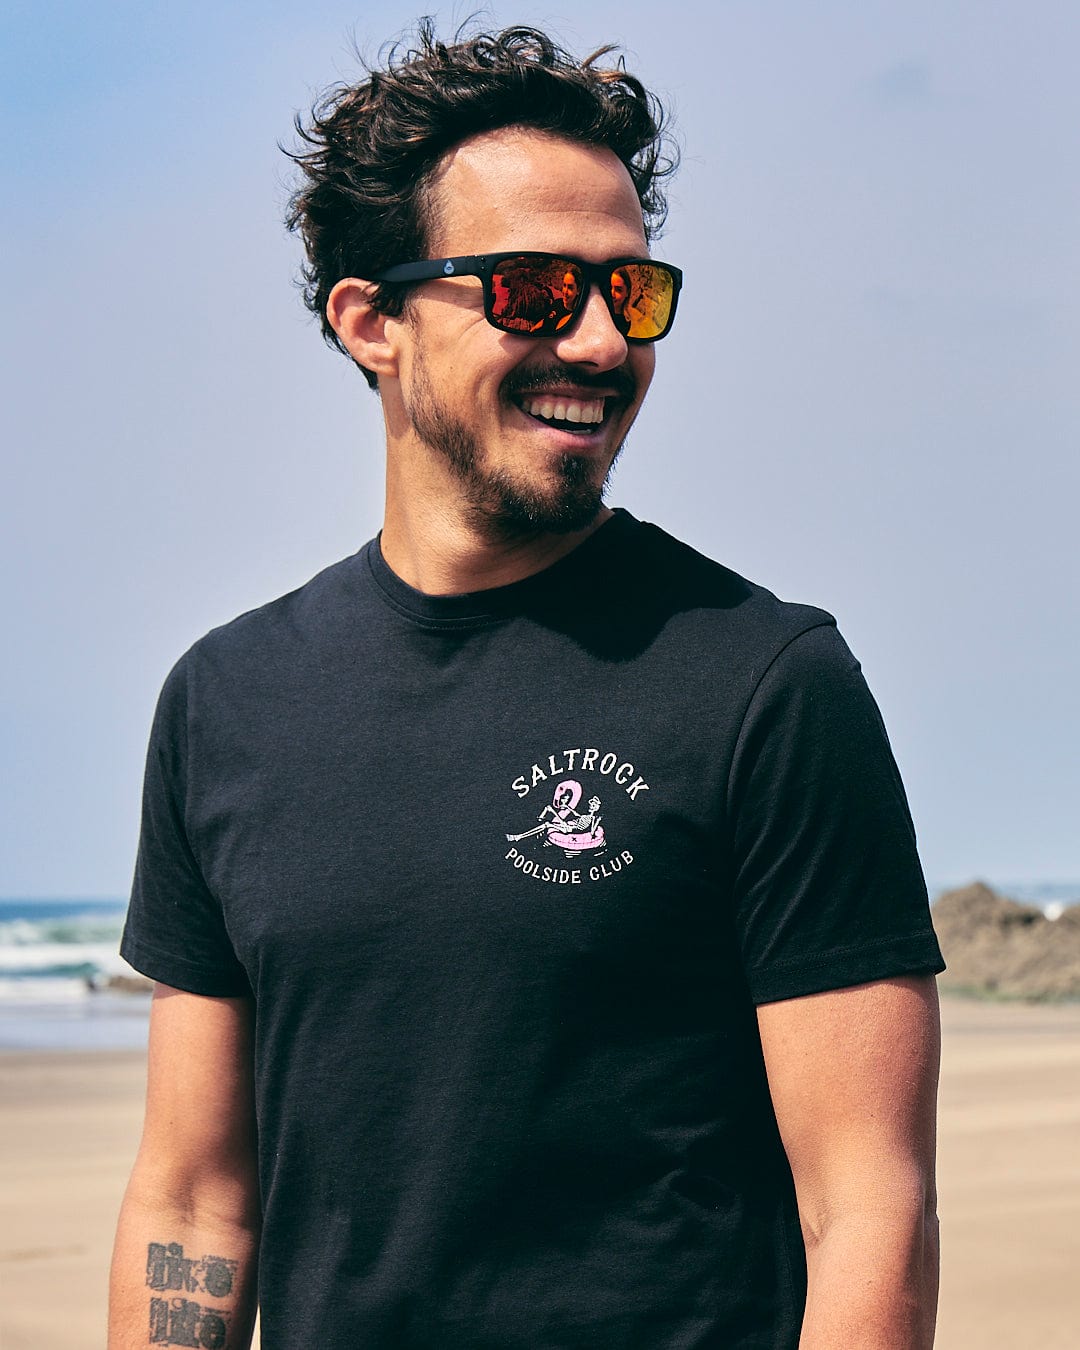 A man wearing sunglasses and a Saltrock Poolside Club Mens Short Sleeve T-Shirt - Black on the beach.